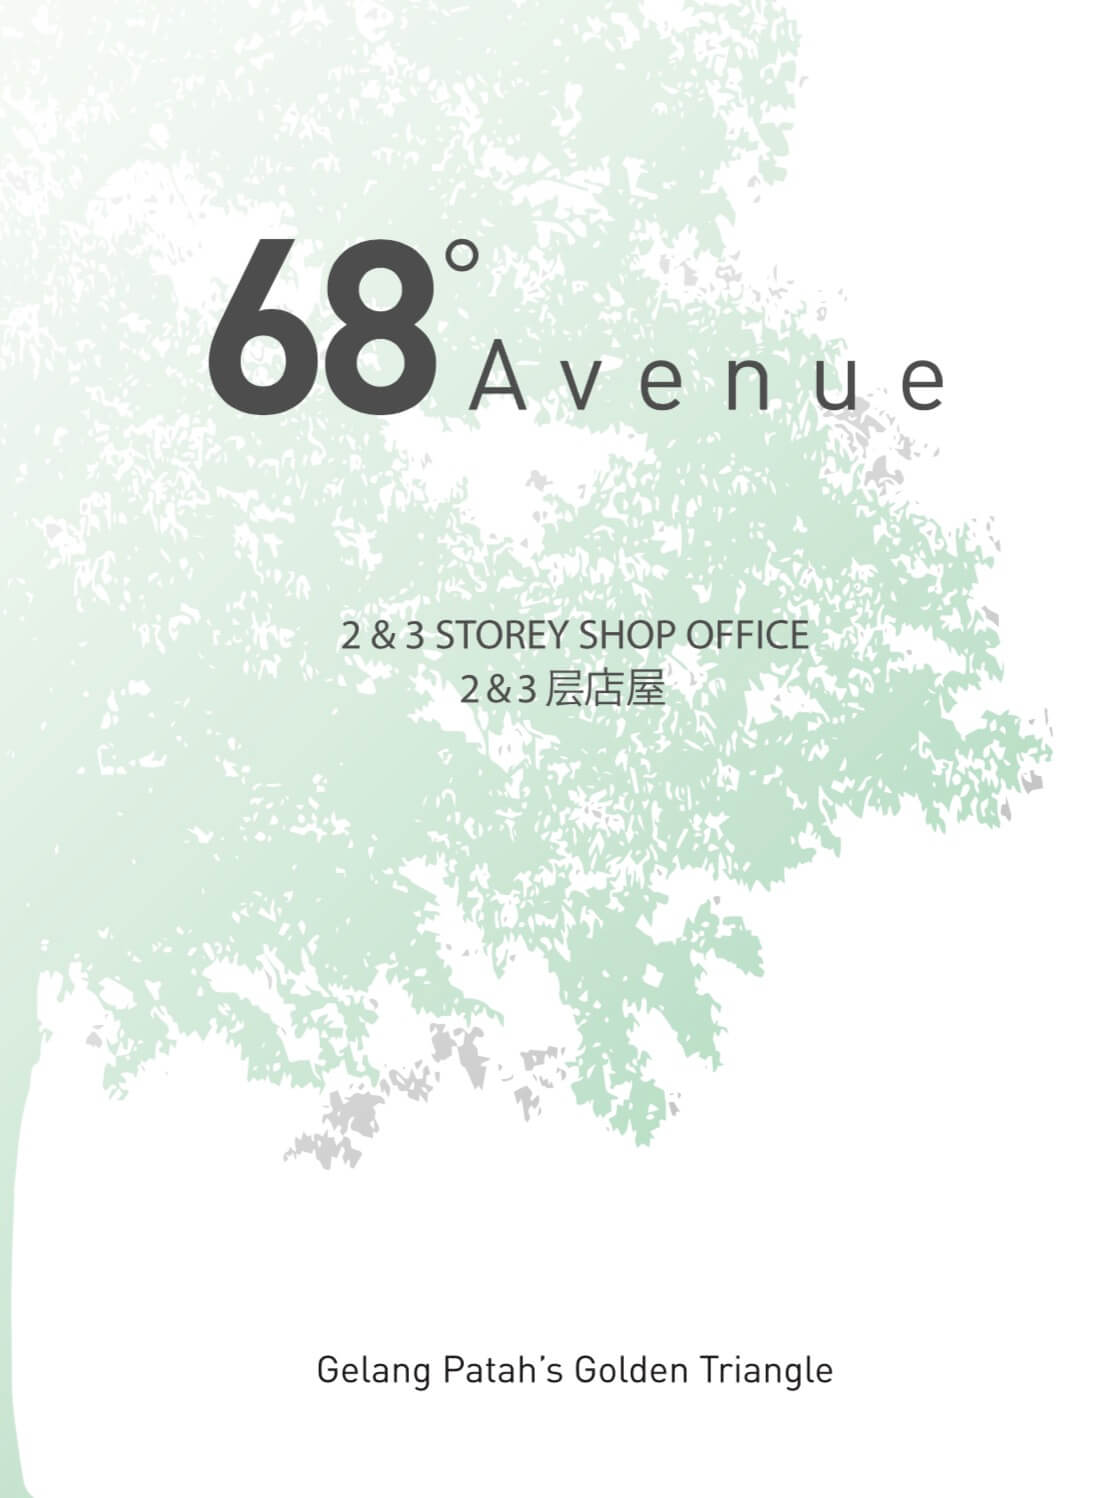 68° Avenue Brochure